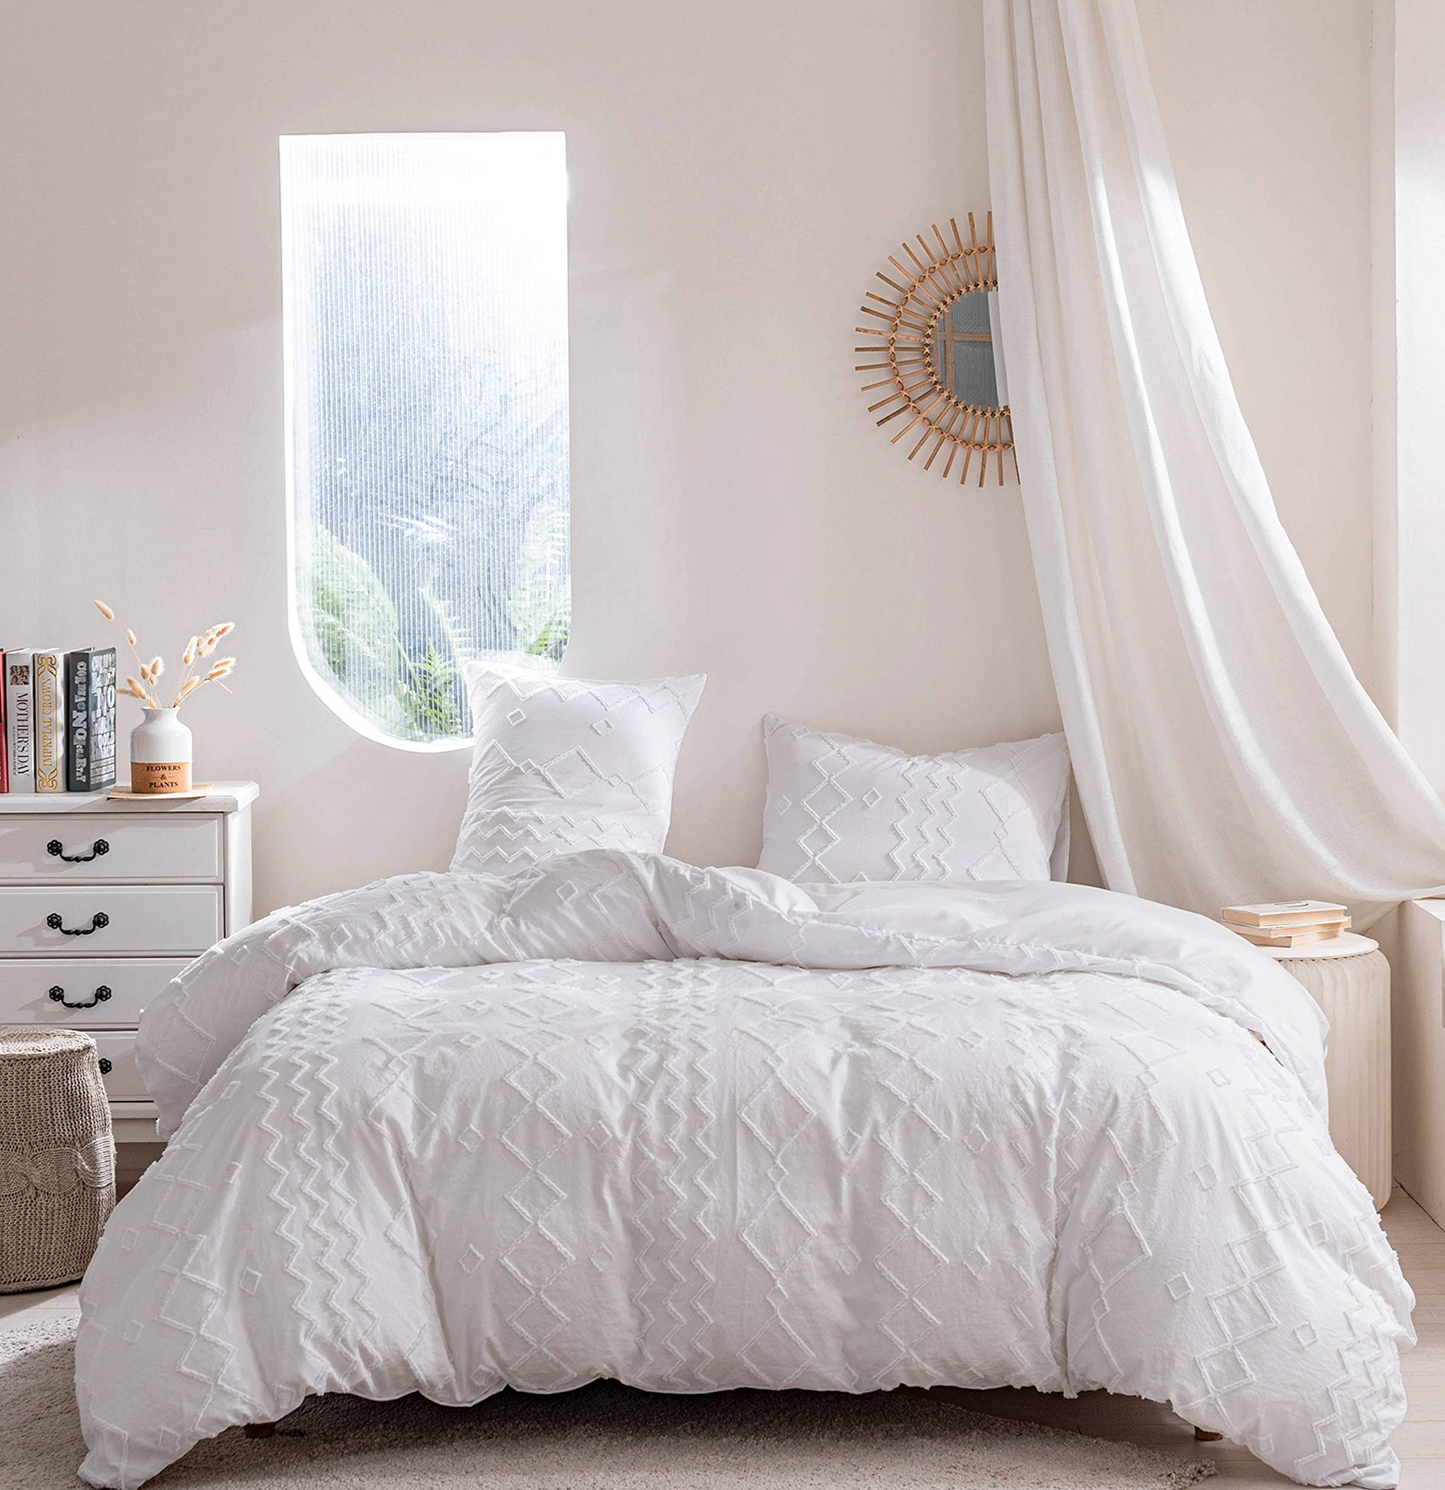 White Comforter Set 3 Pieces Striped Textured Bedding for All Season